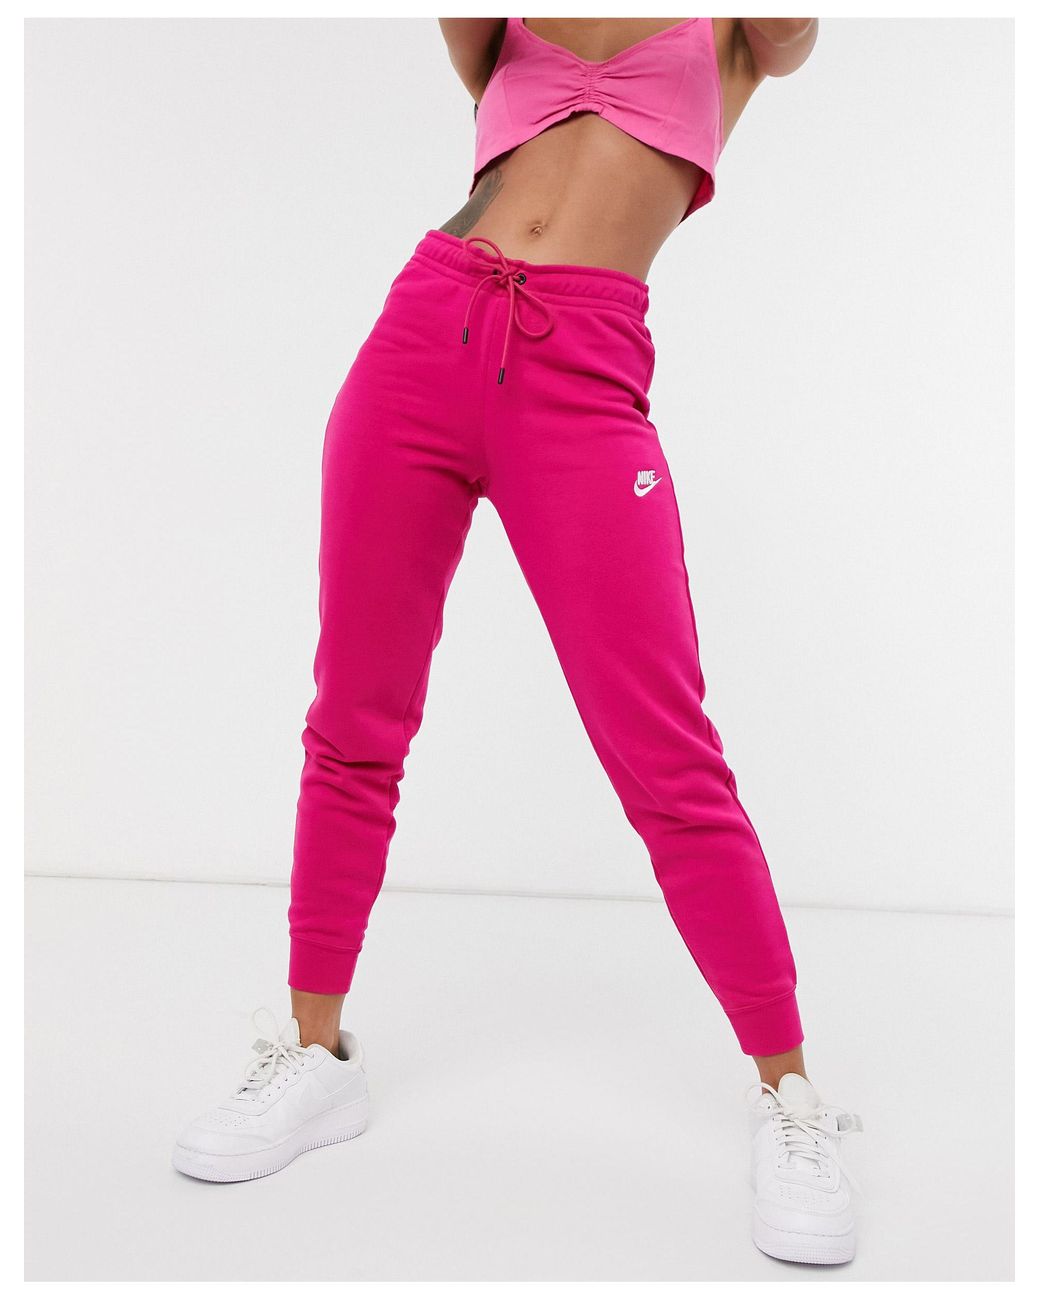 Nike Essential Tight Fit Lyst Pink Australia joggers | in Fleece